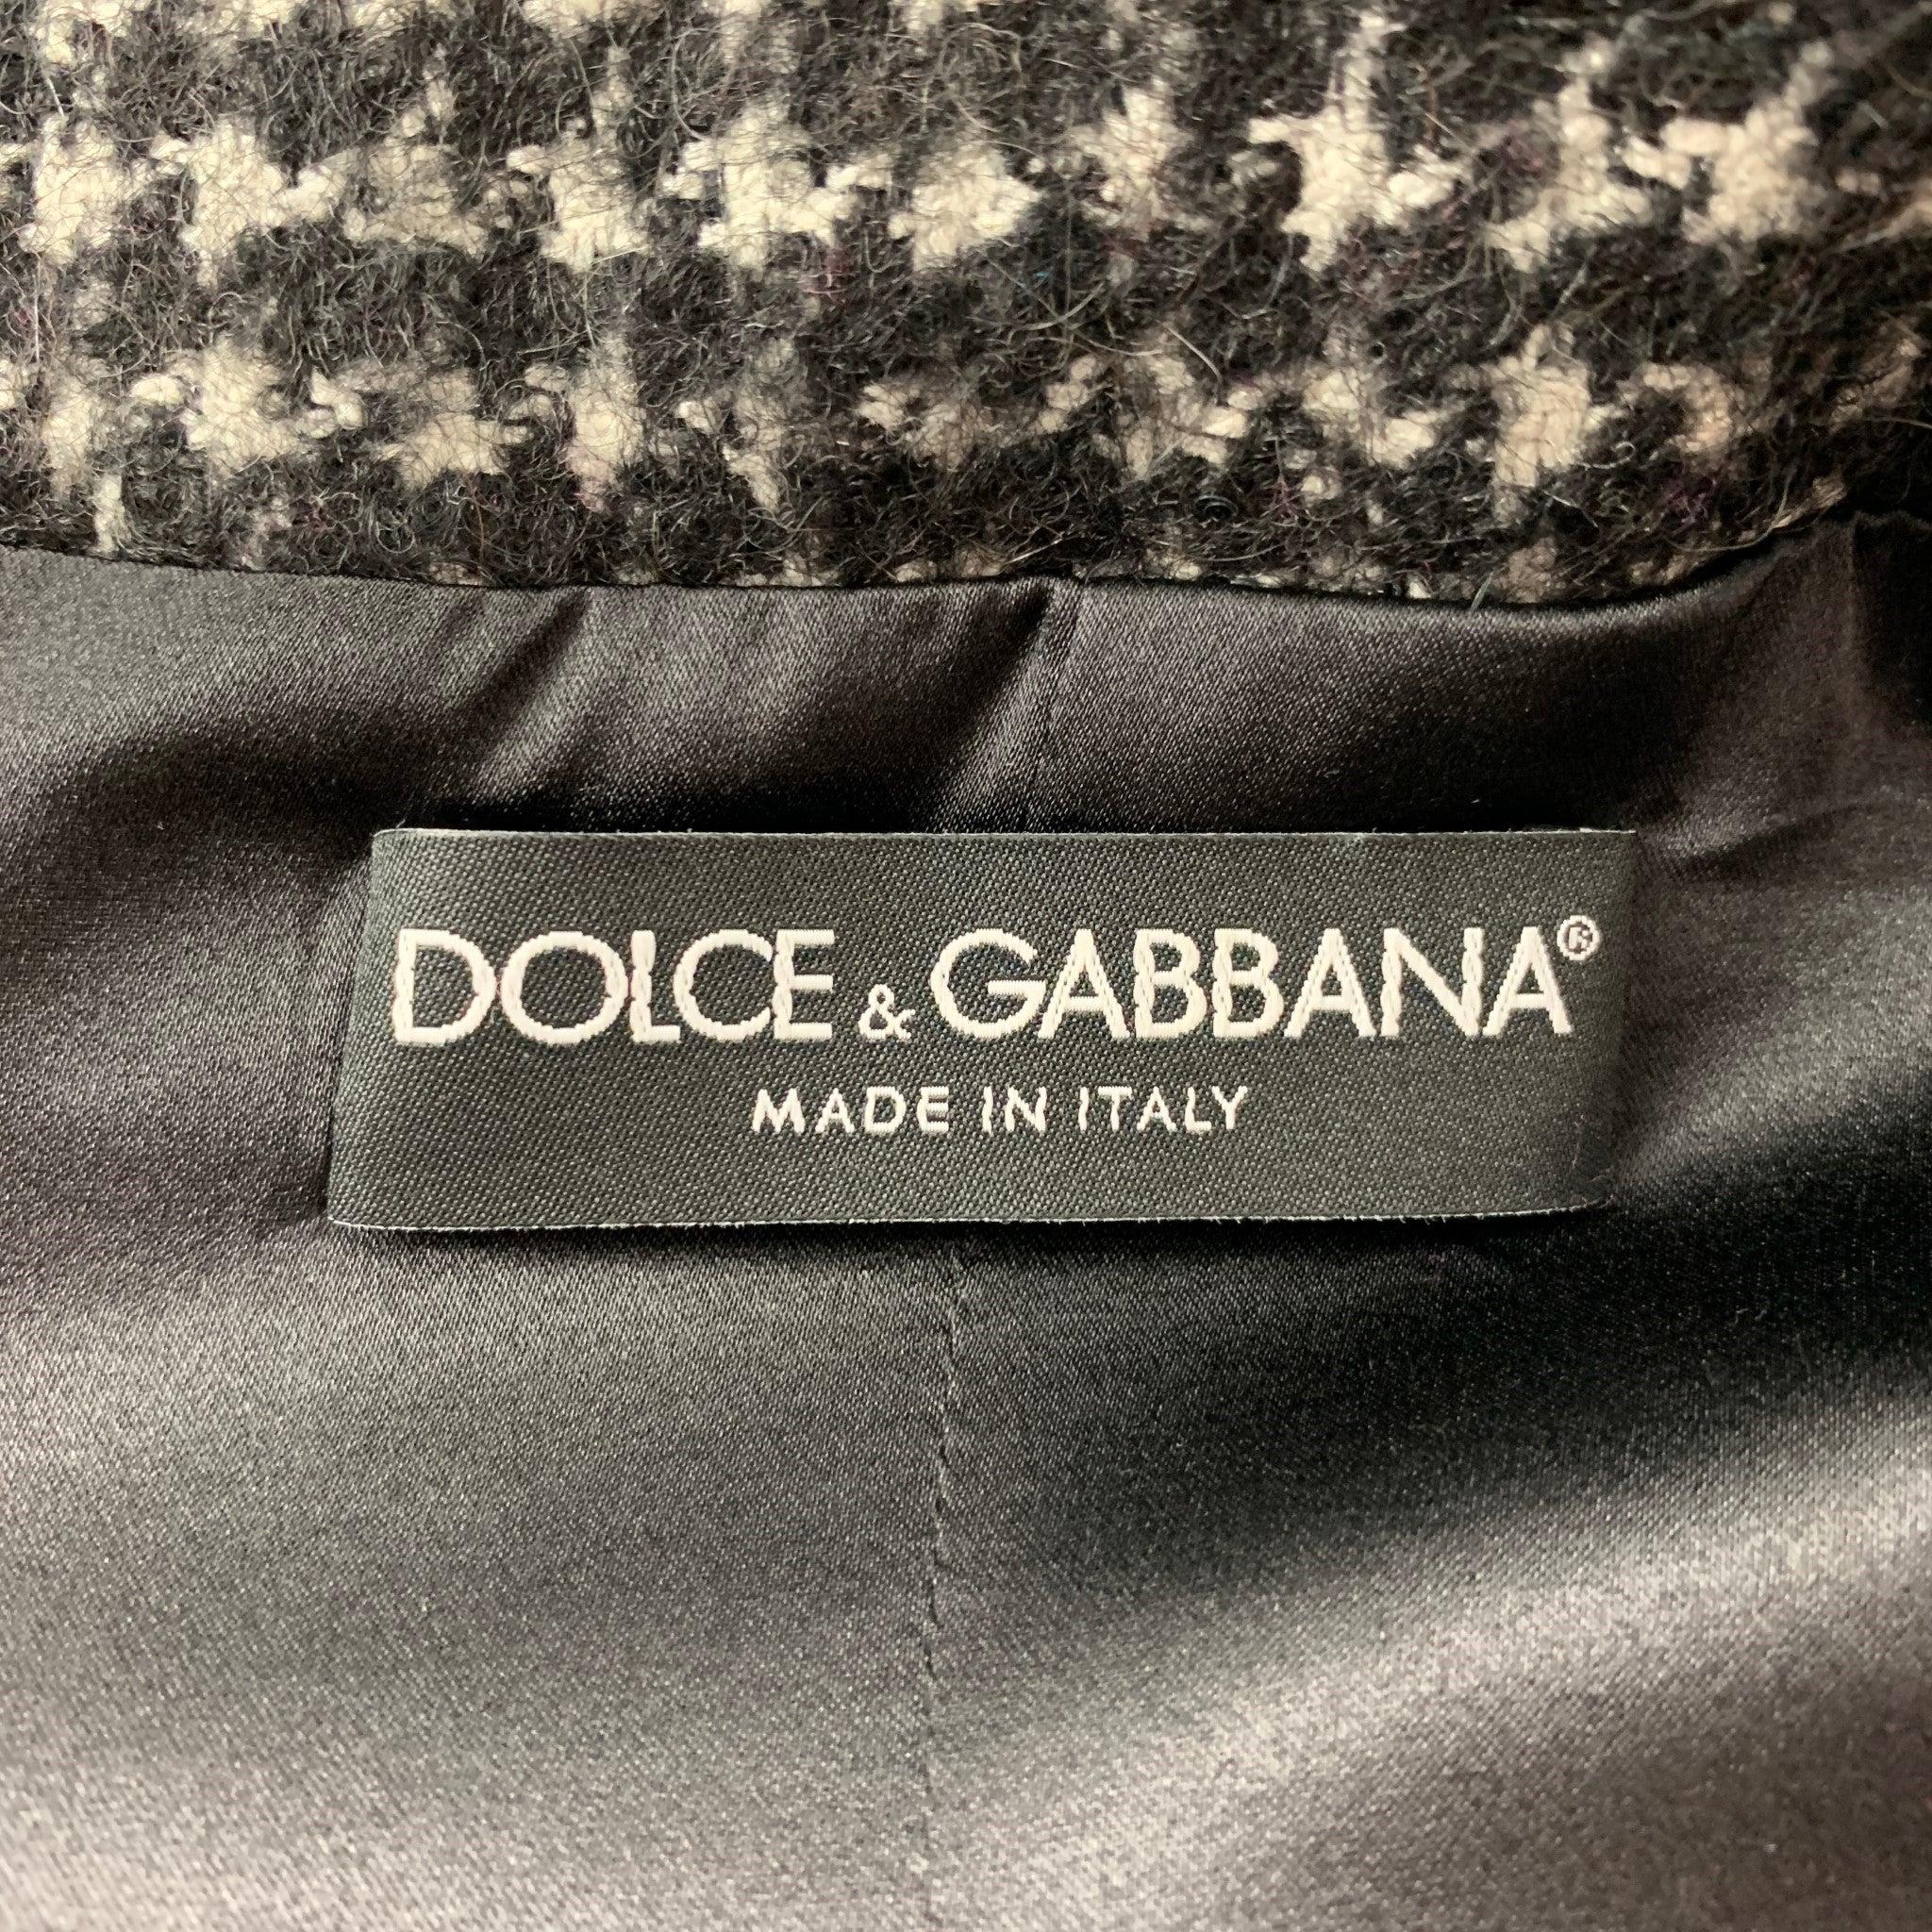 DOLCE & GABBANA Size 8 Black & White Houndstooth Virgin Wool Blend Jacket 1